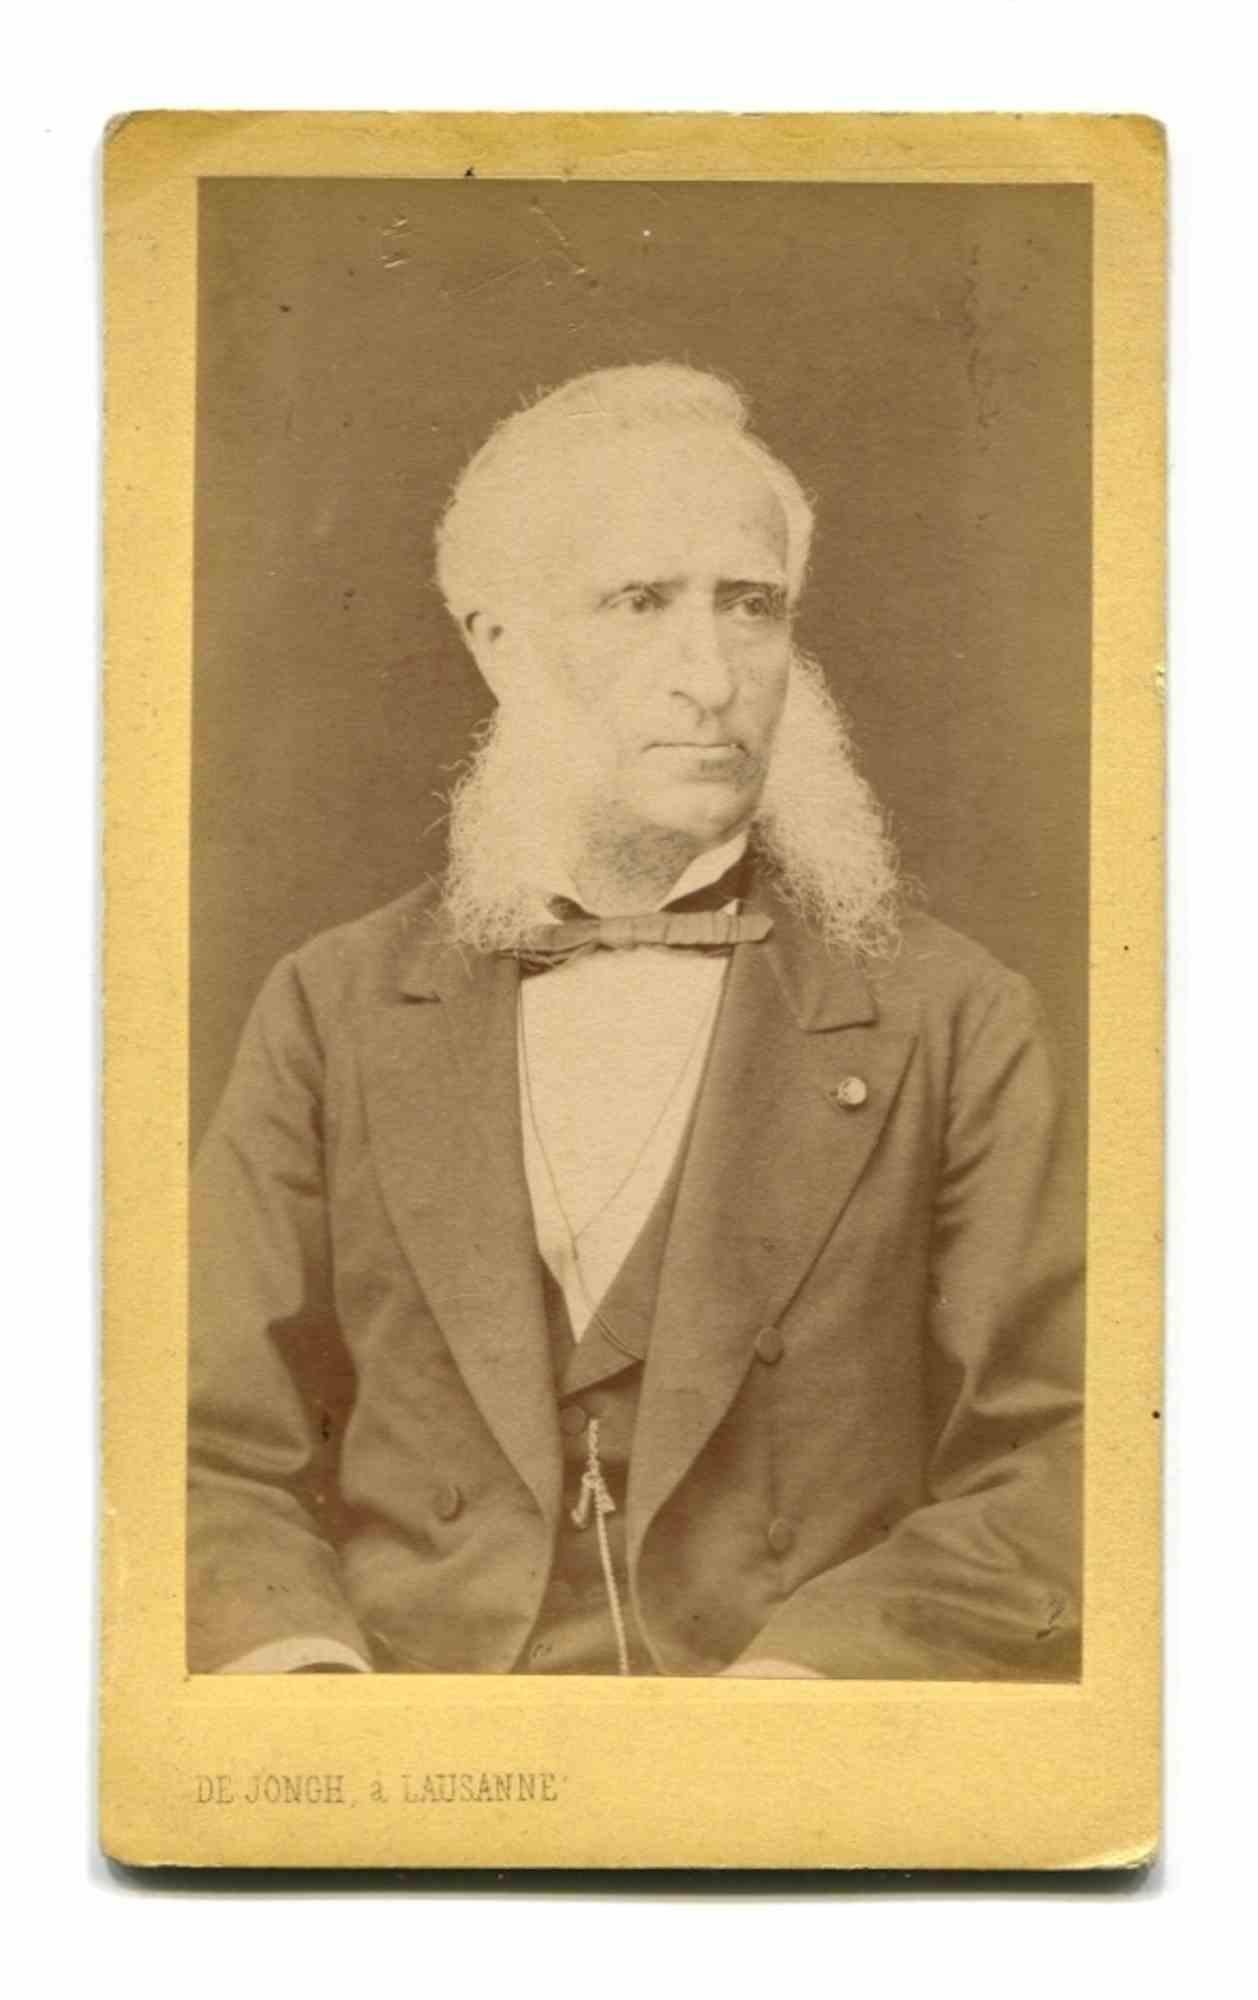 Portrait of Philip Edmond Wodehouse - Vintage Photo - 19th Century 